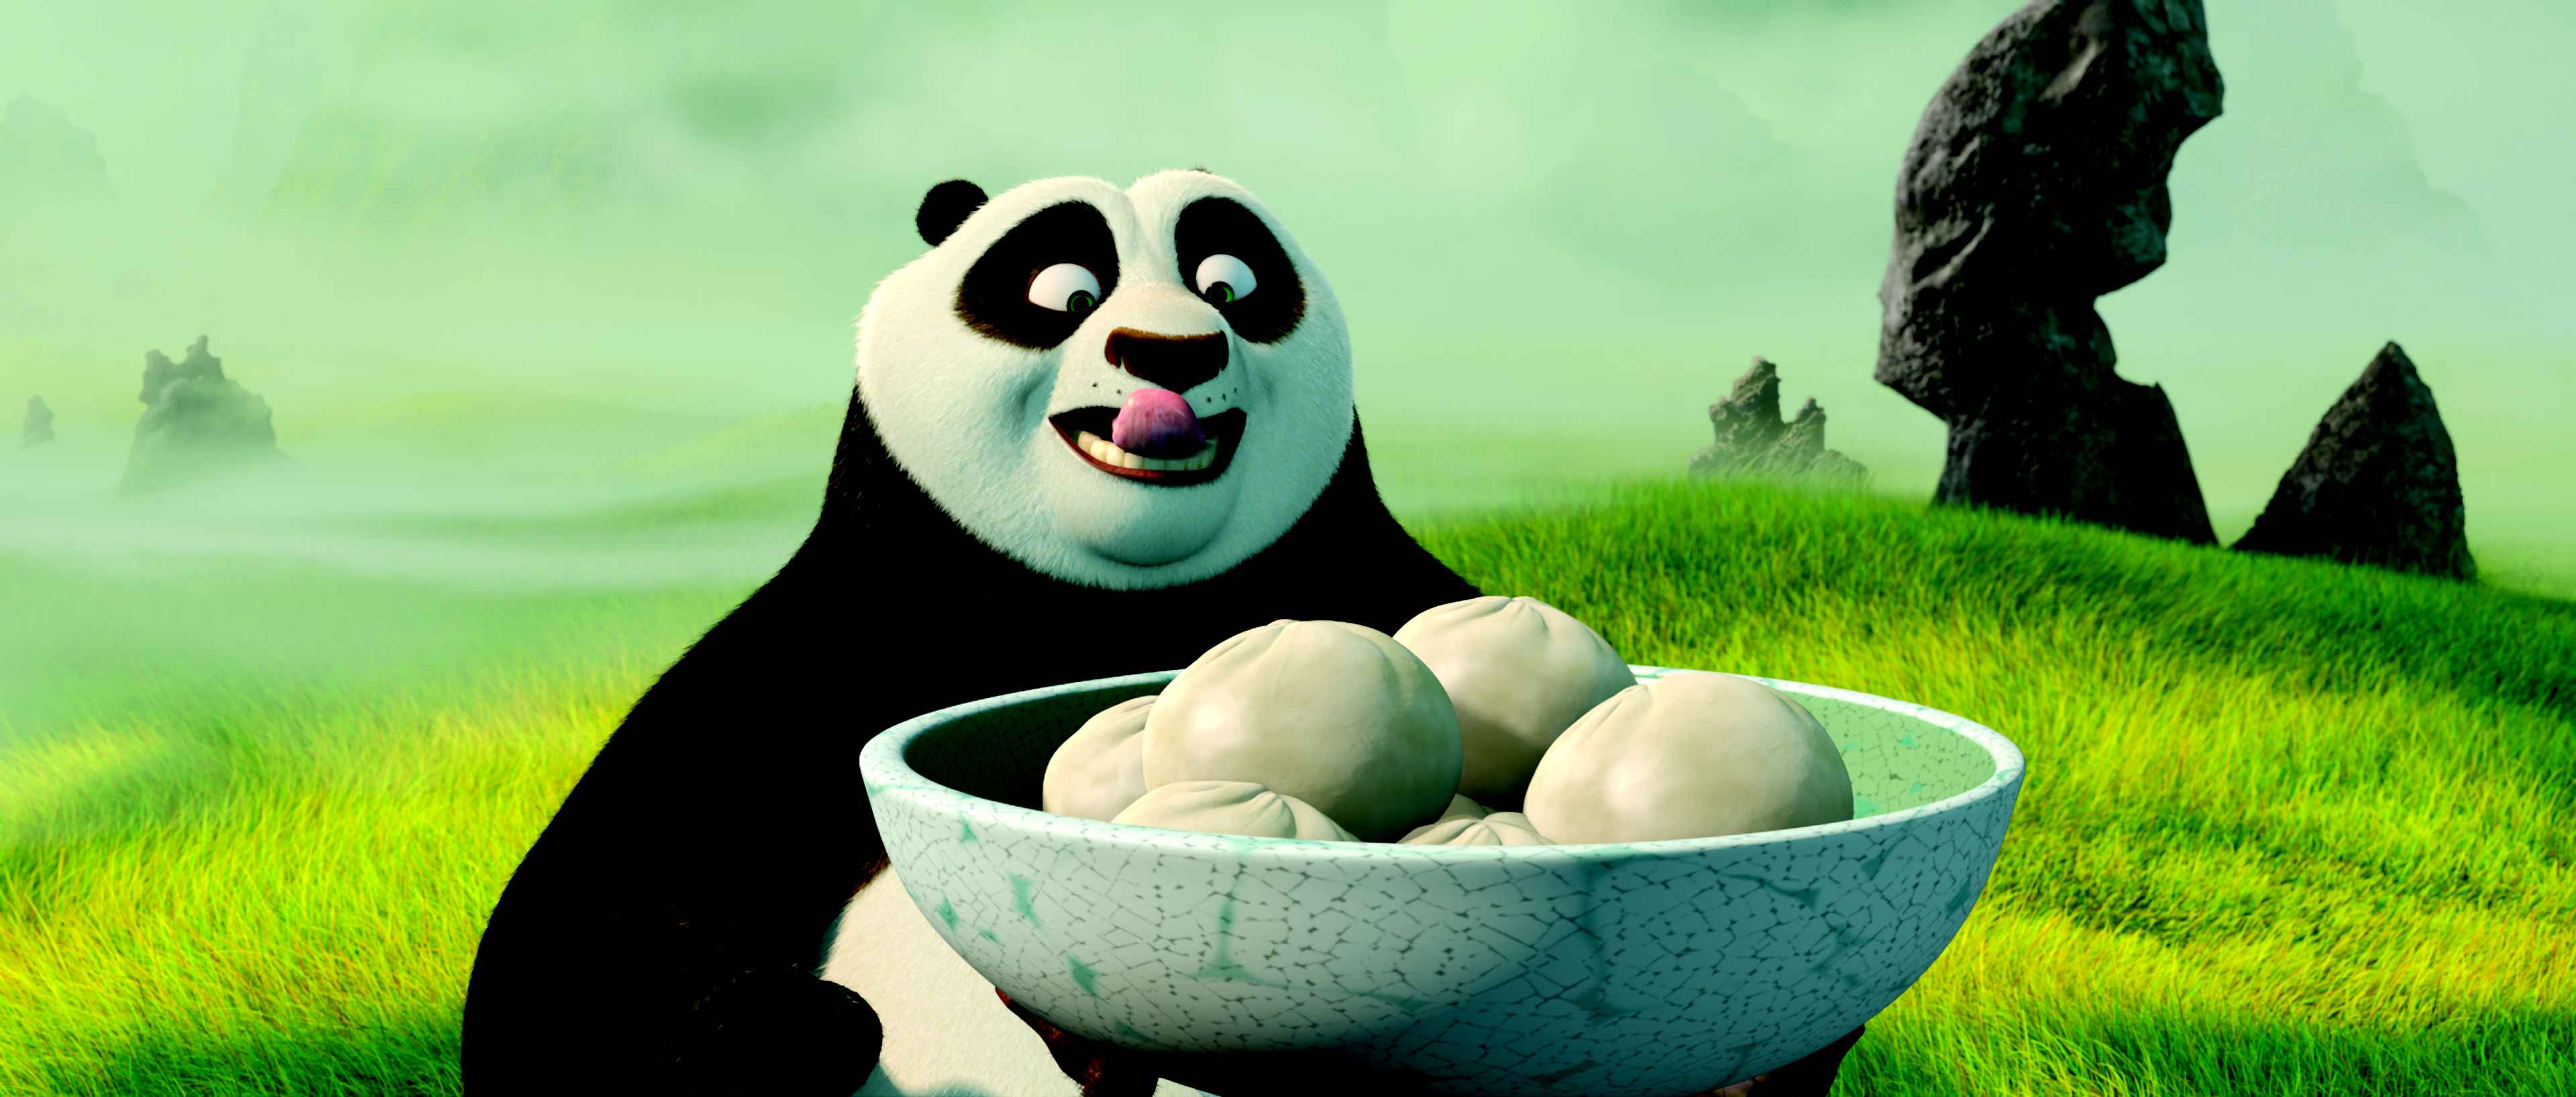 365064 Bild herunterladen filme, kung fu panda 3, po (kung fu panda), kung fu panda - Hintergrundbilder und Bildschirmschoner kostenlos